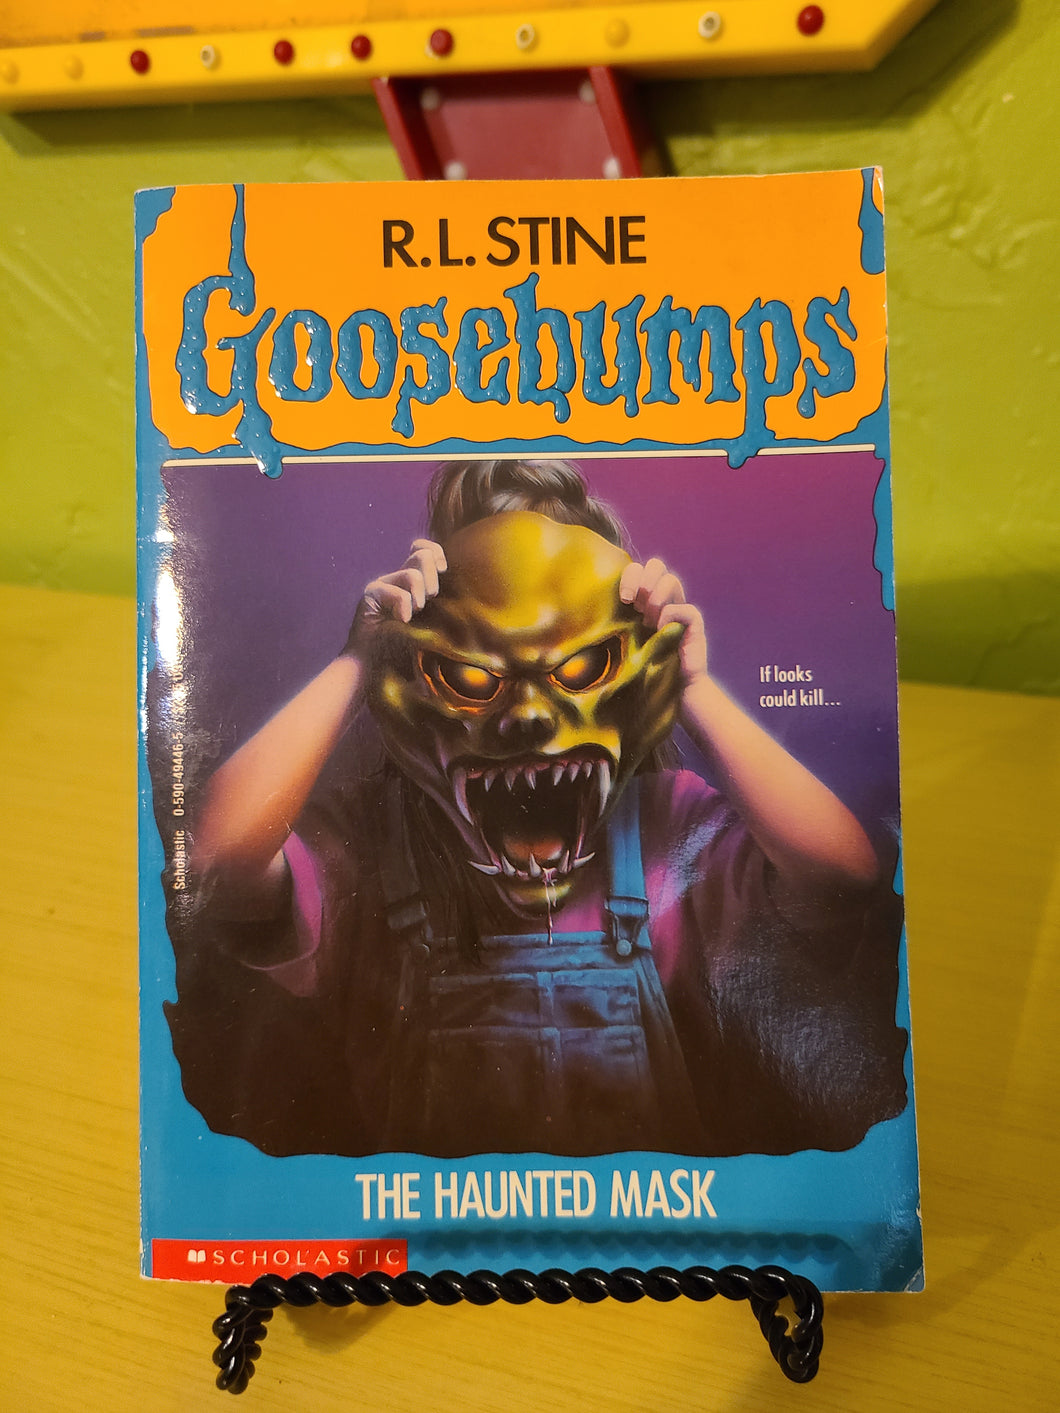 Goosebumps #1 - The Haunted Mask